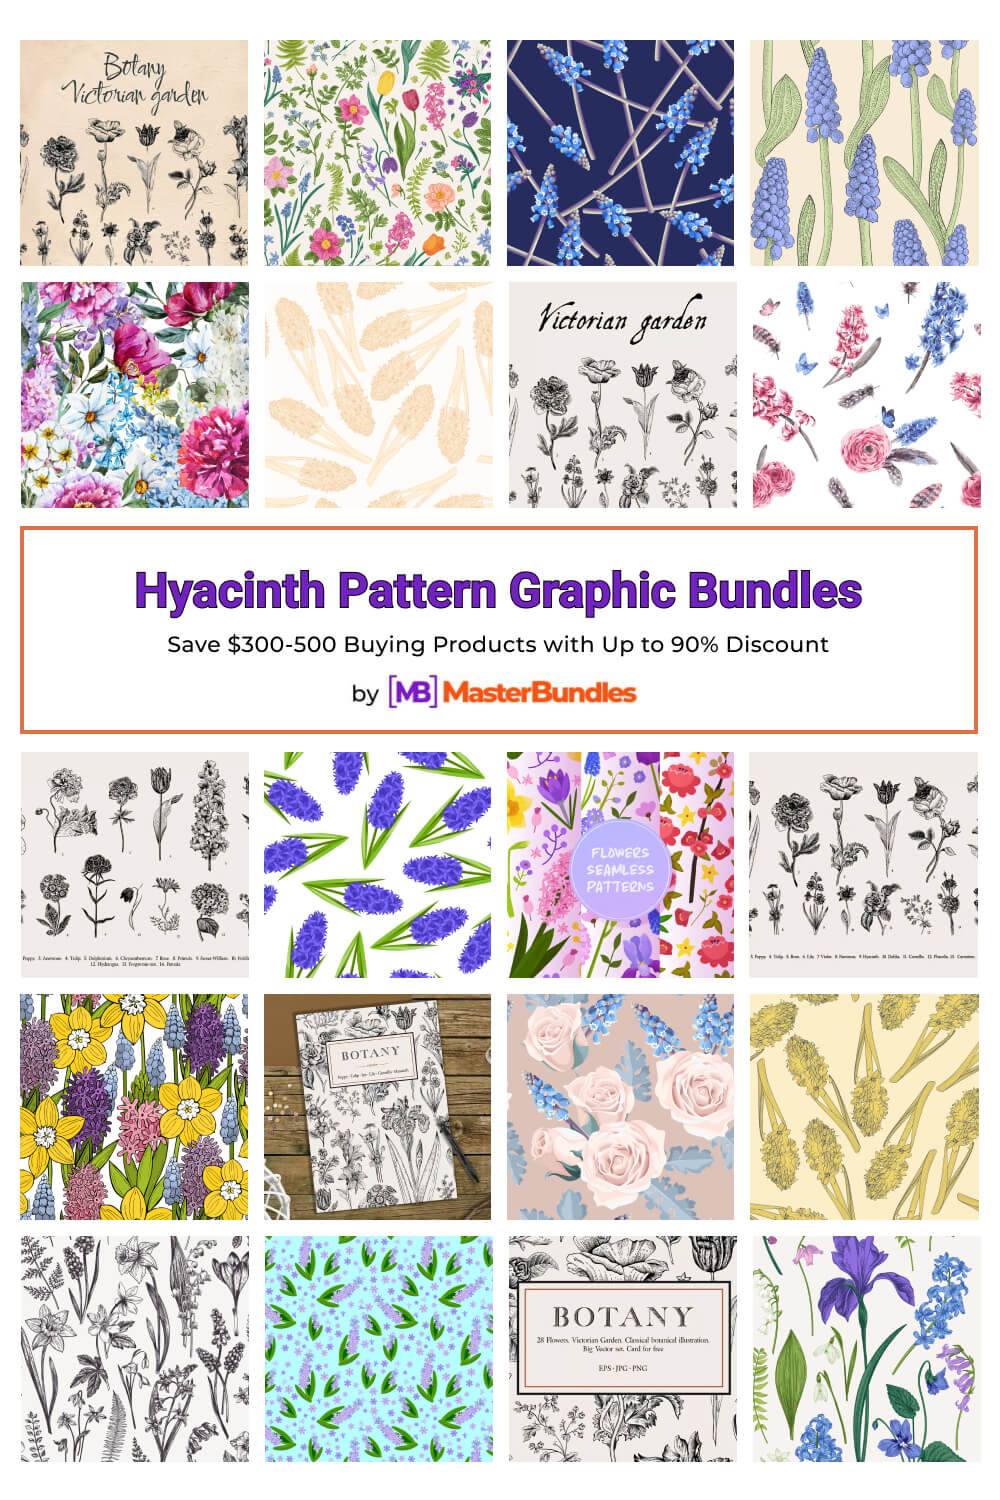 hyacinth pattern graphic bundles pinterest image.